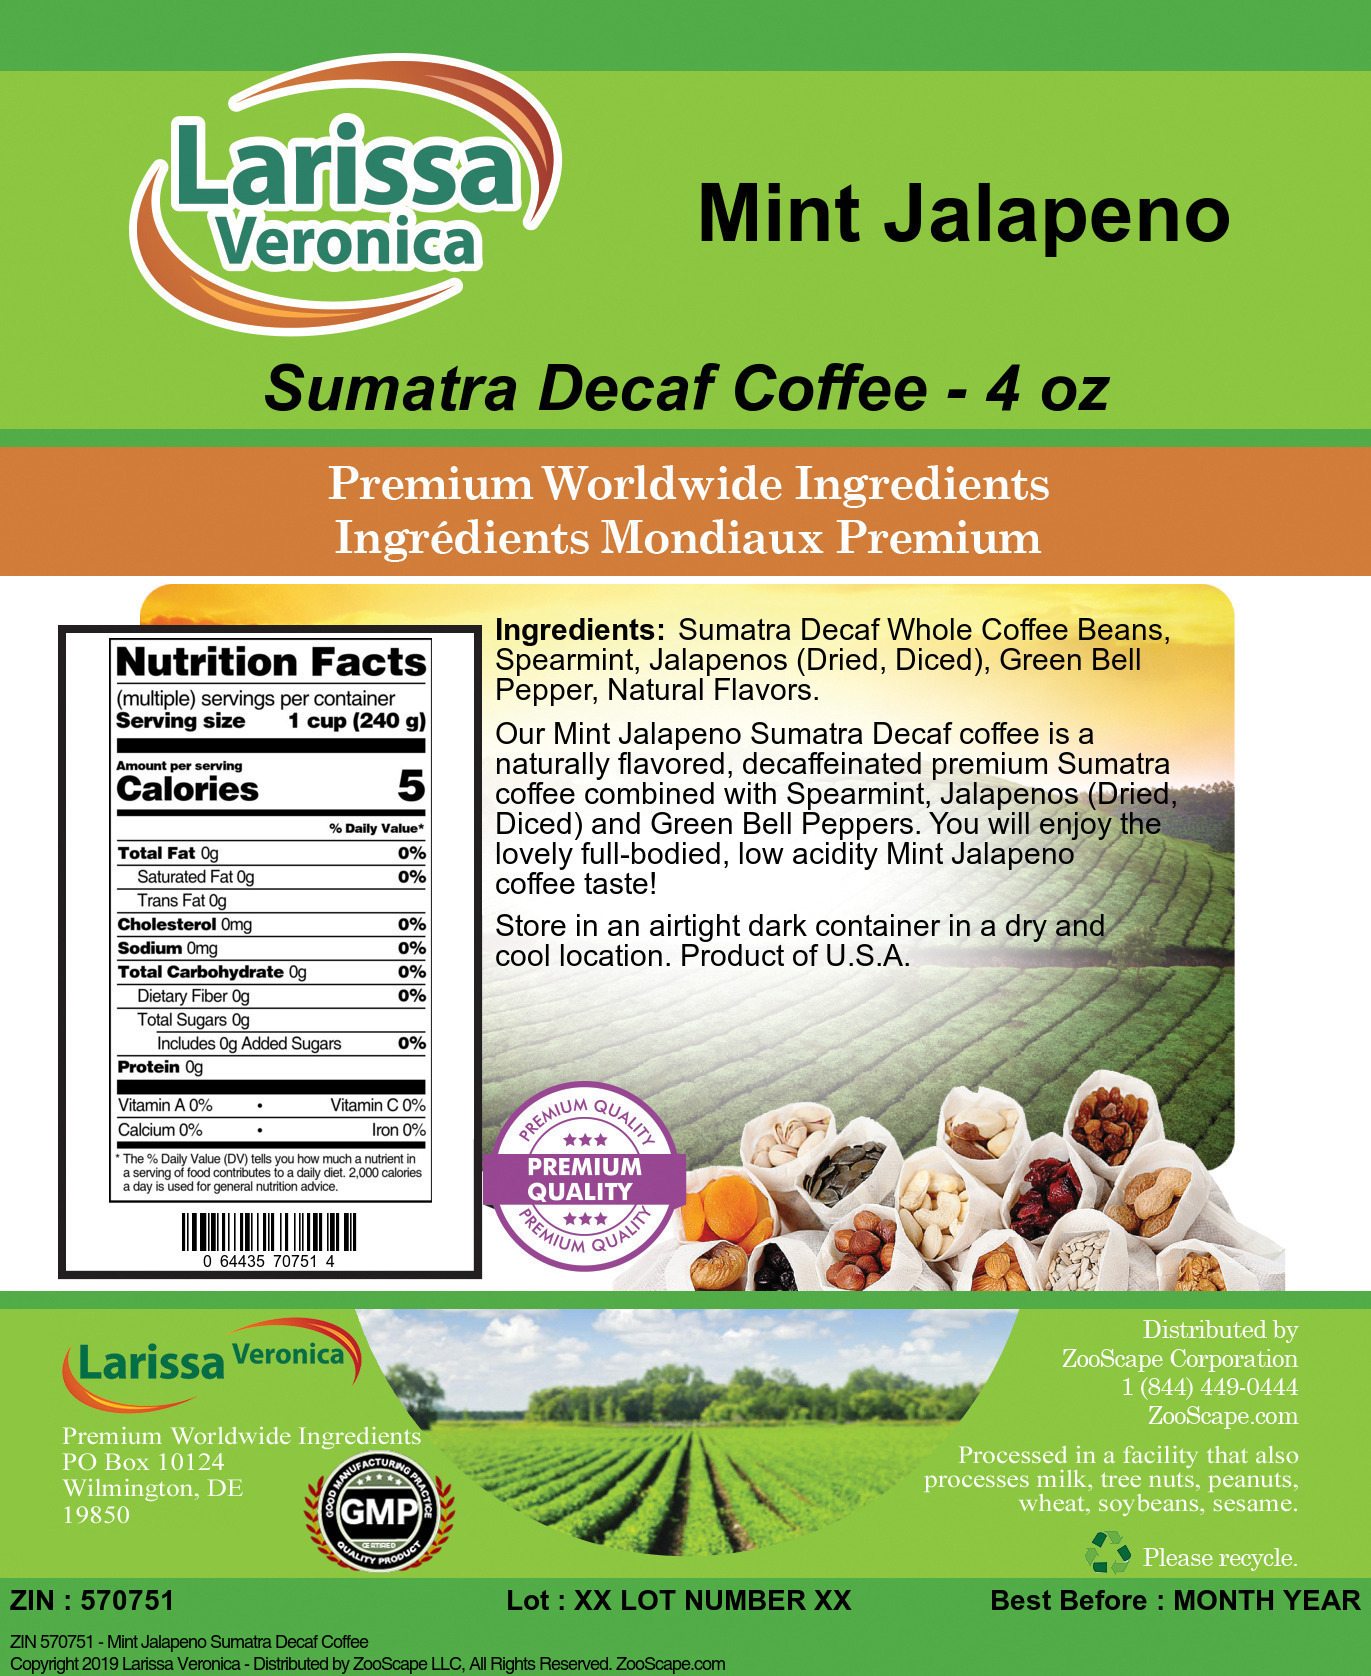 Mint Jalapeno Sumatra Decaf Coffee - Label